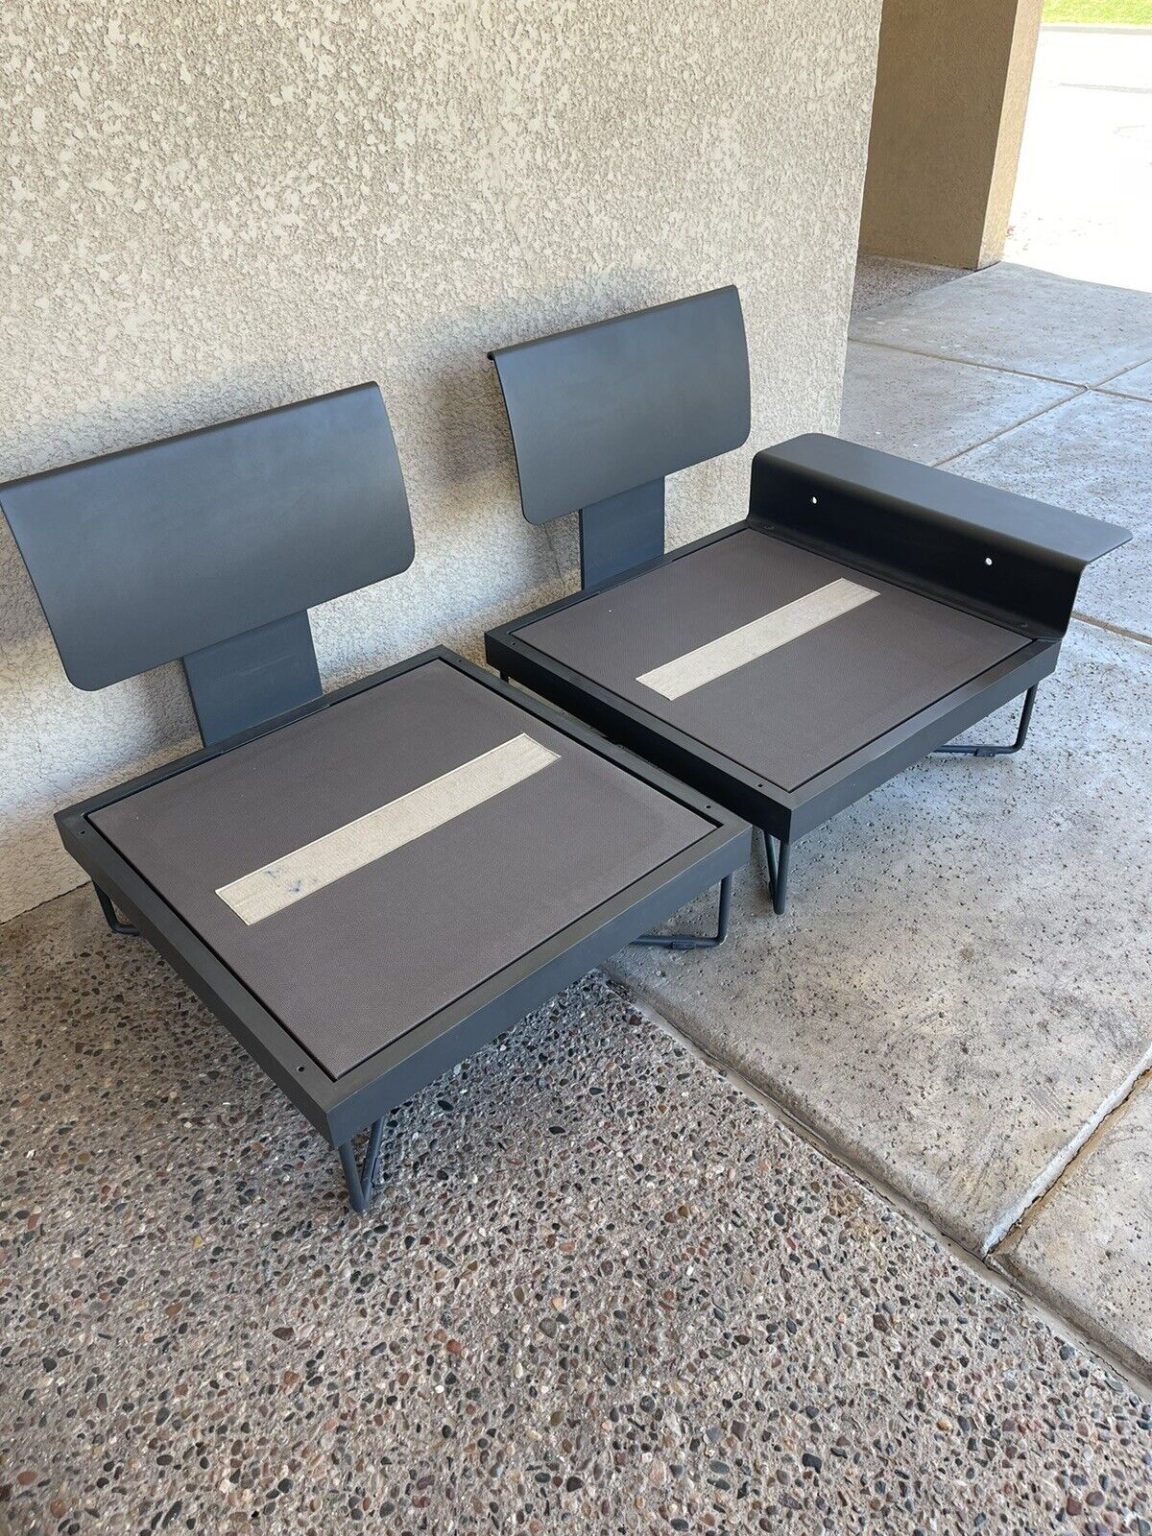 6 Piece Aluminum Patio Set chairs